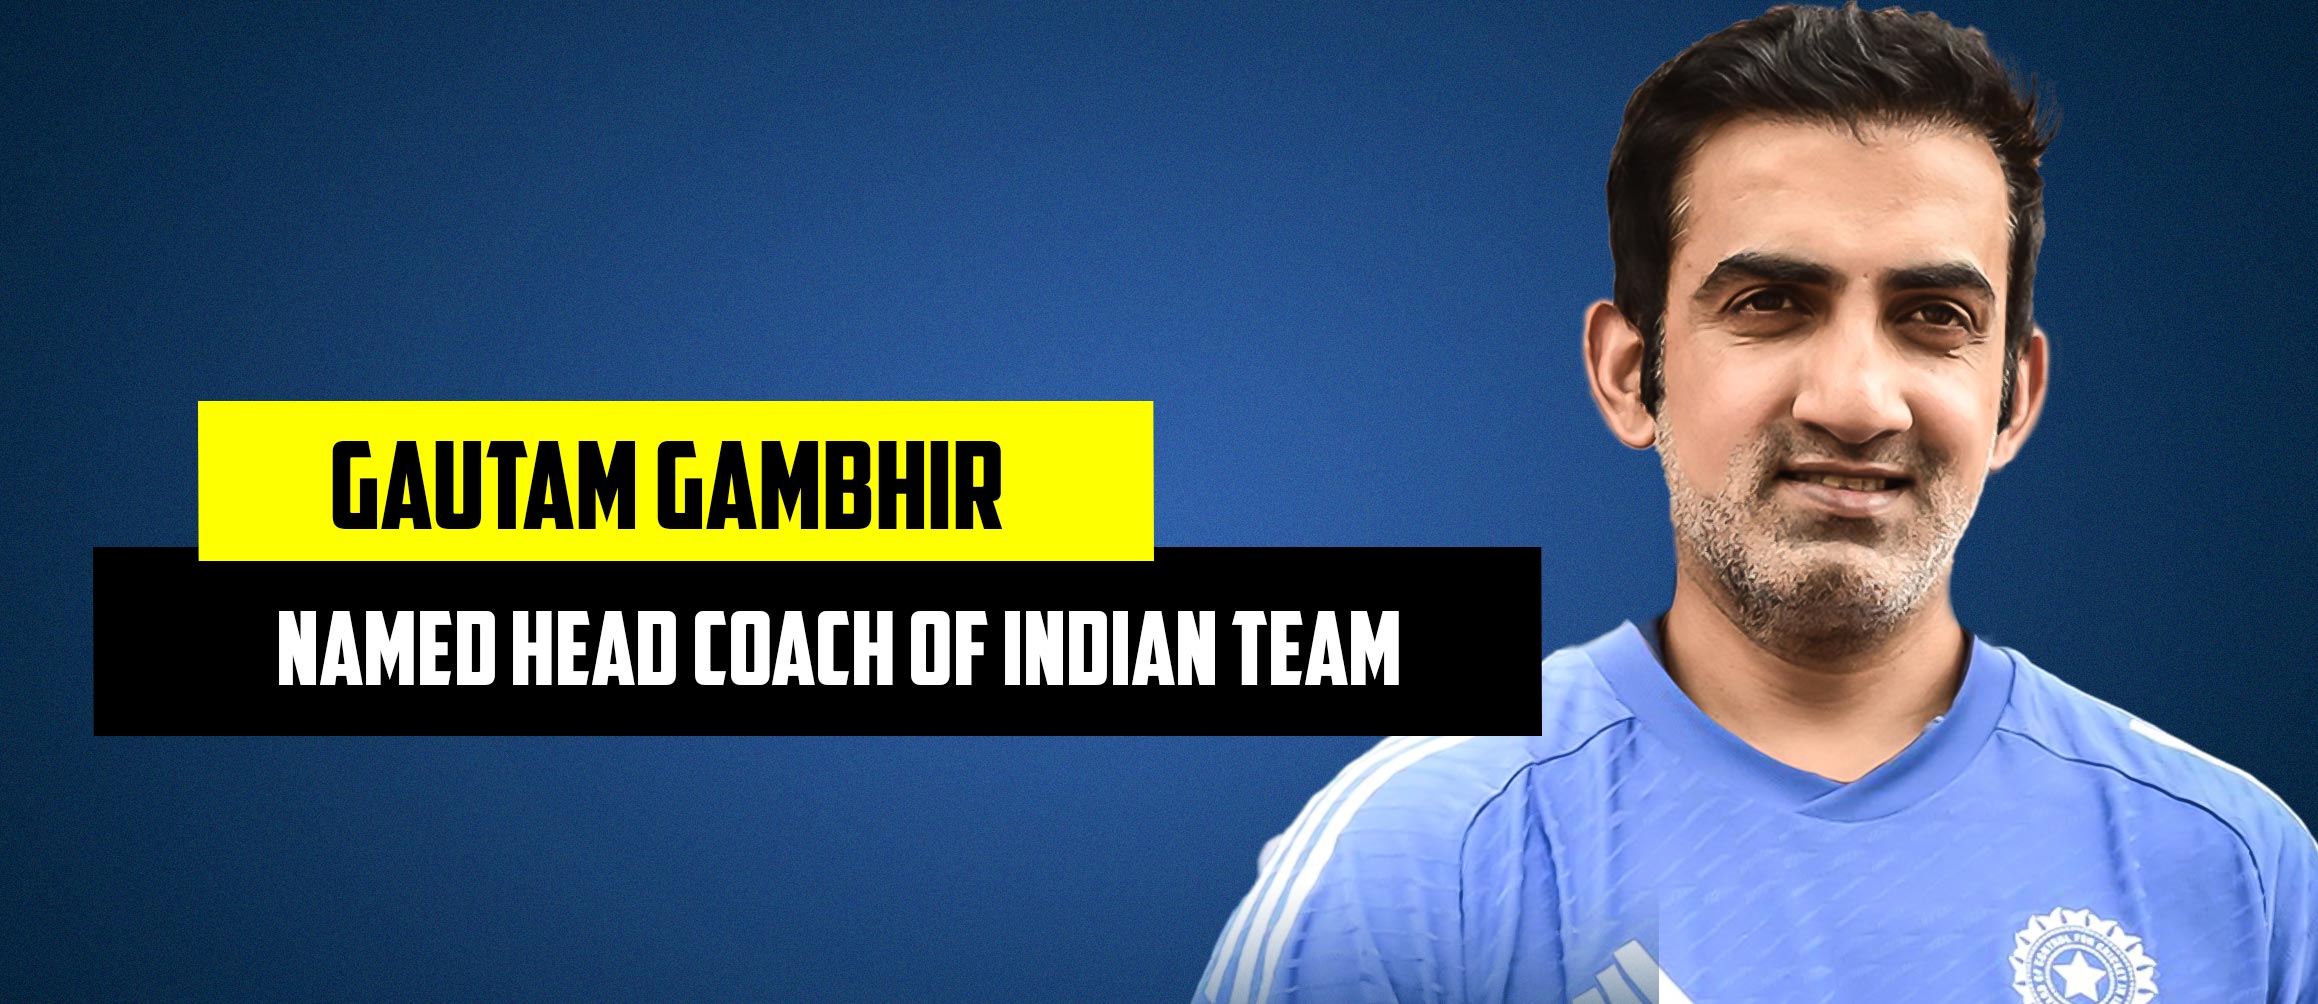 Gautam Gambhir Named Head Coach of Indian Team